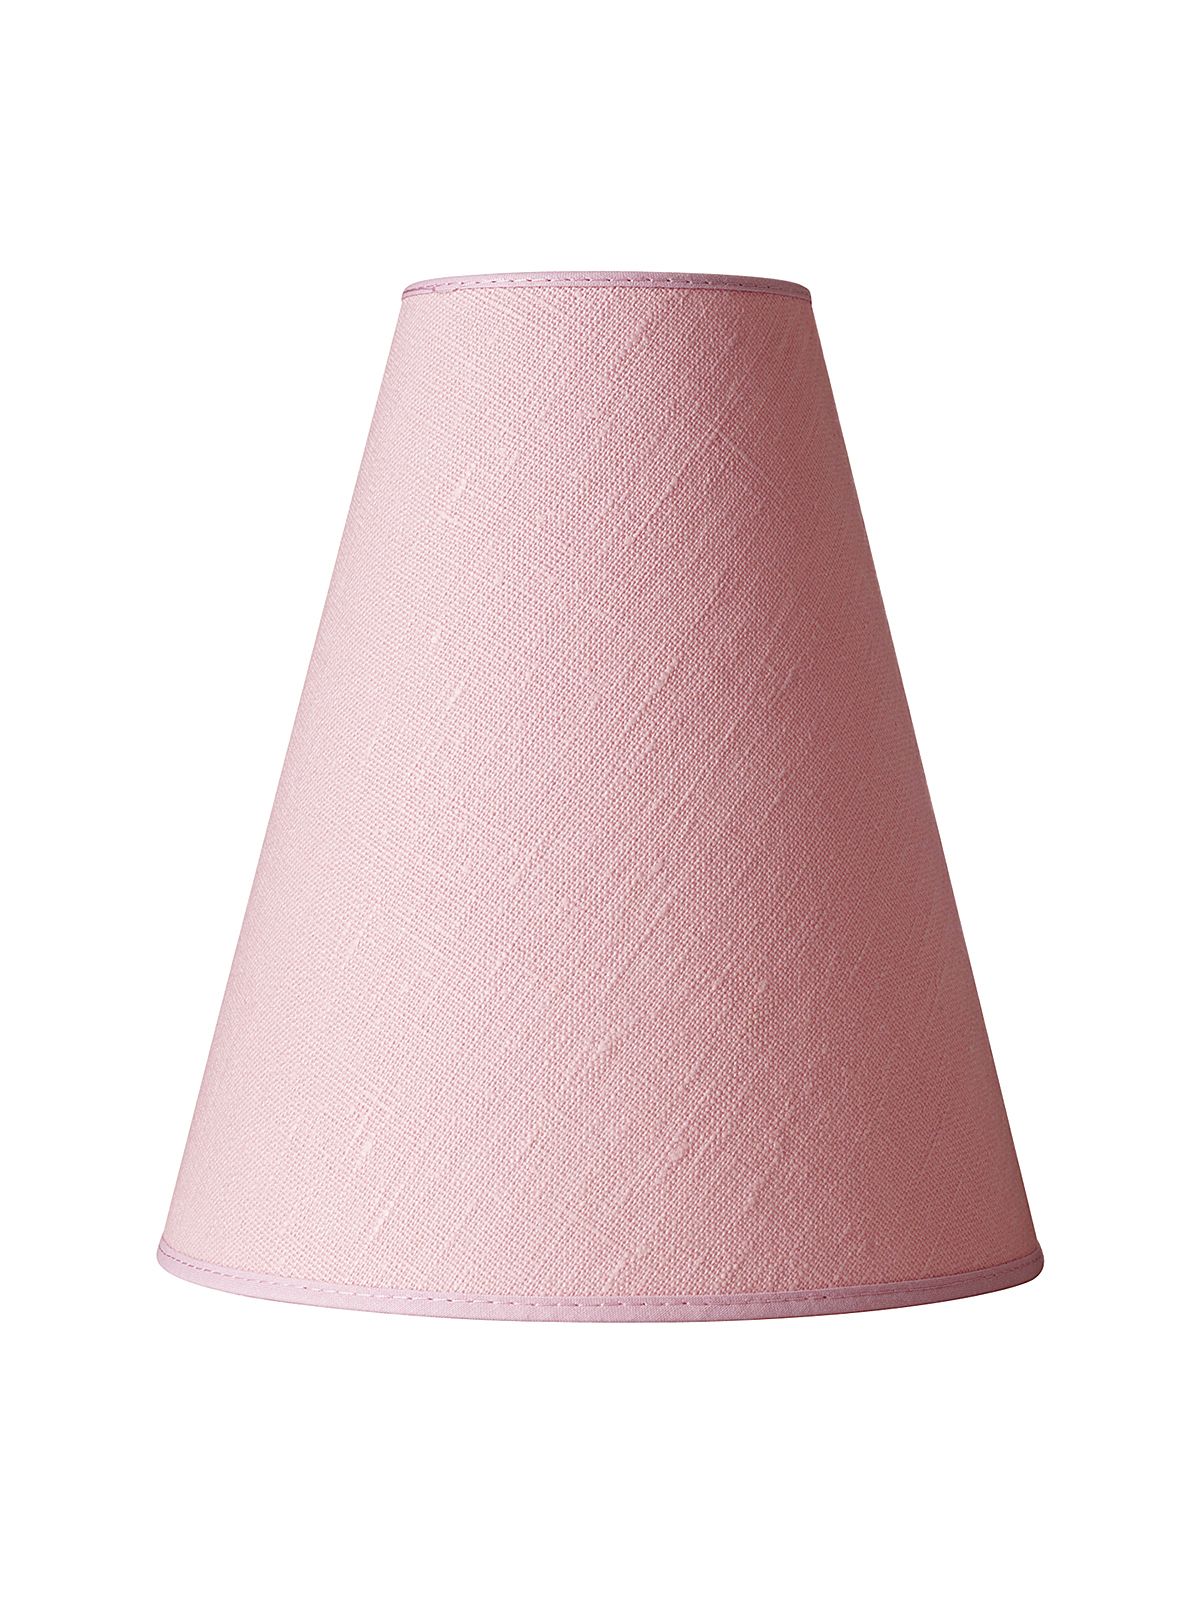 Nielsen Light - Carolin Trafikskærm Pink  fra Lampeexperten